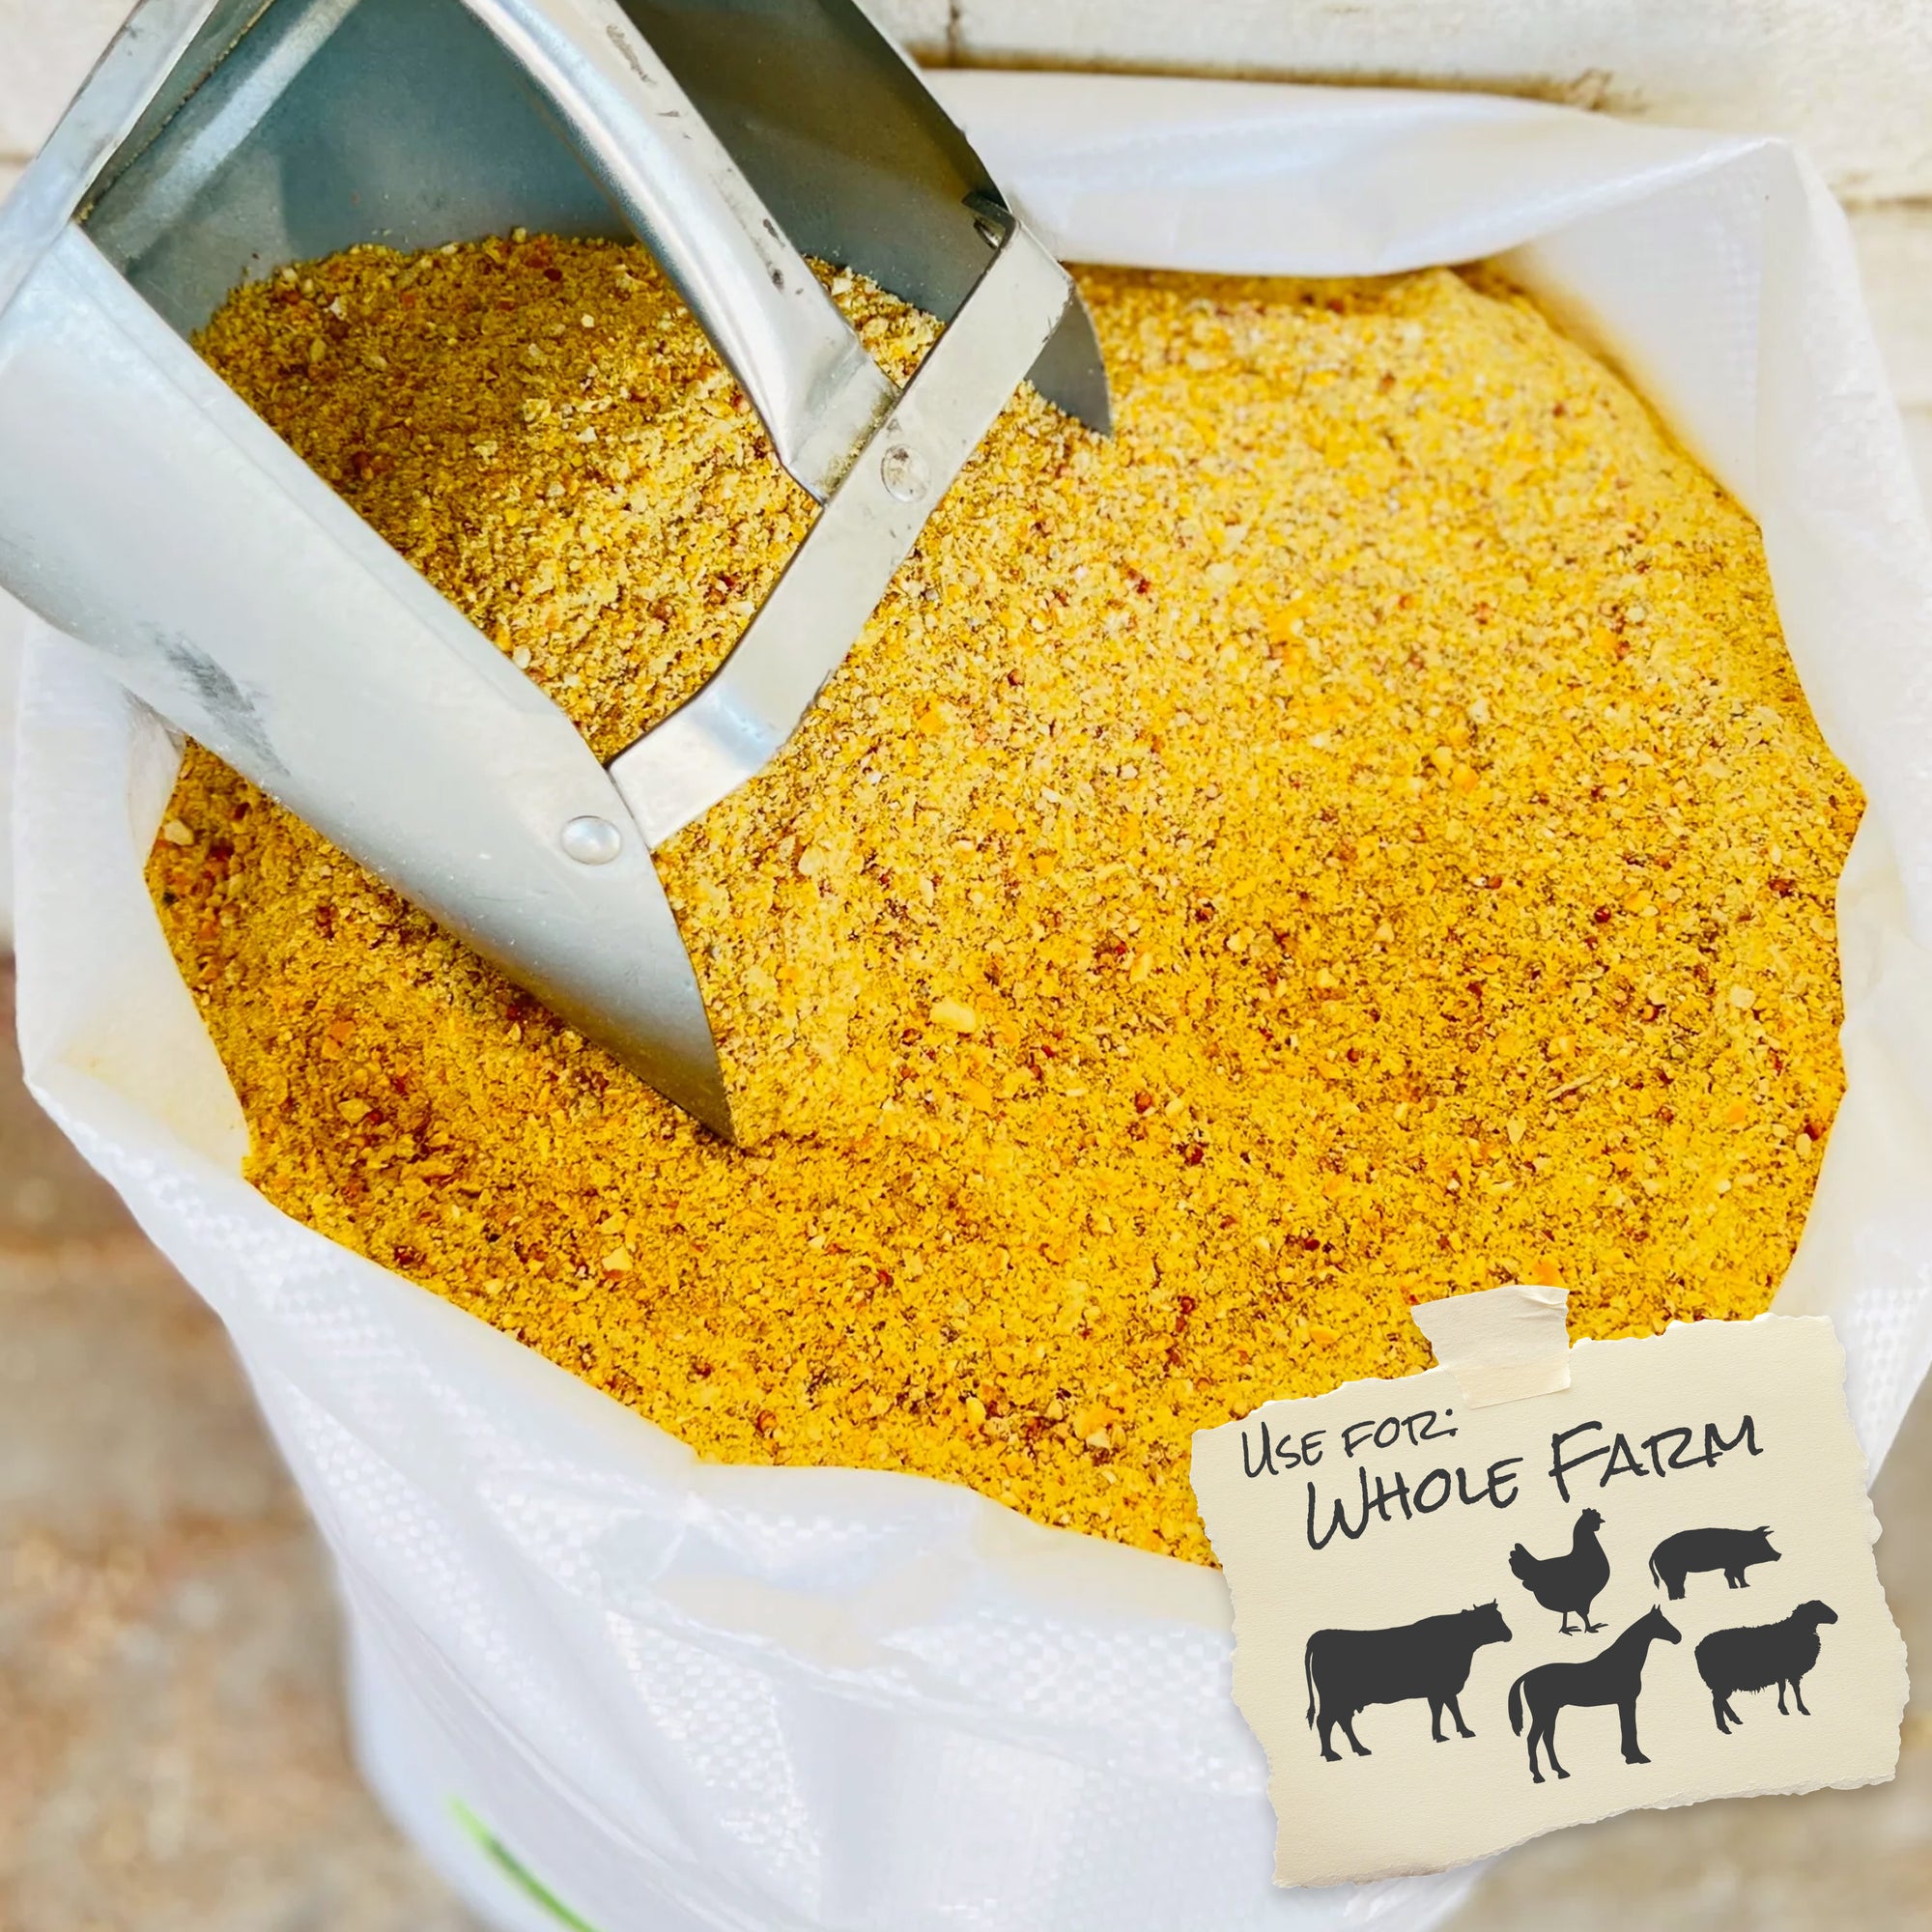 Chopped Corn Animal Feed by Leland Mills